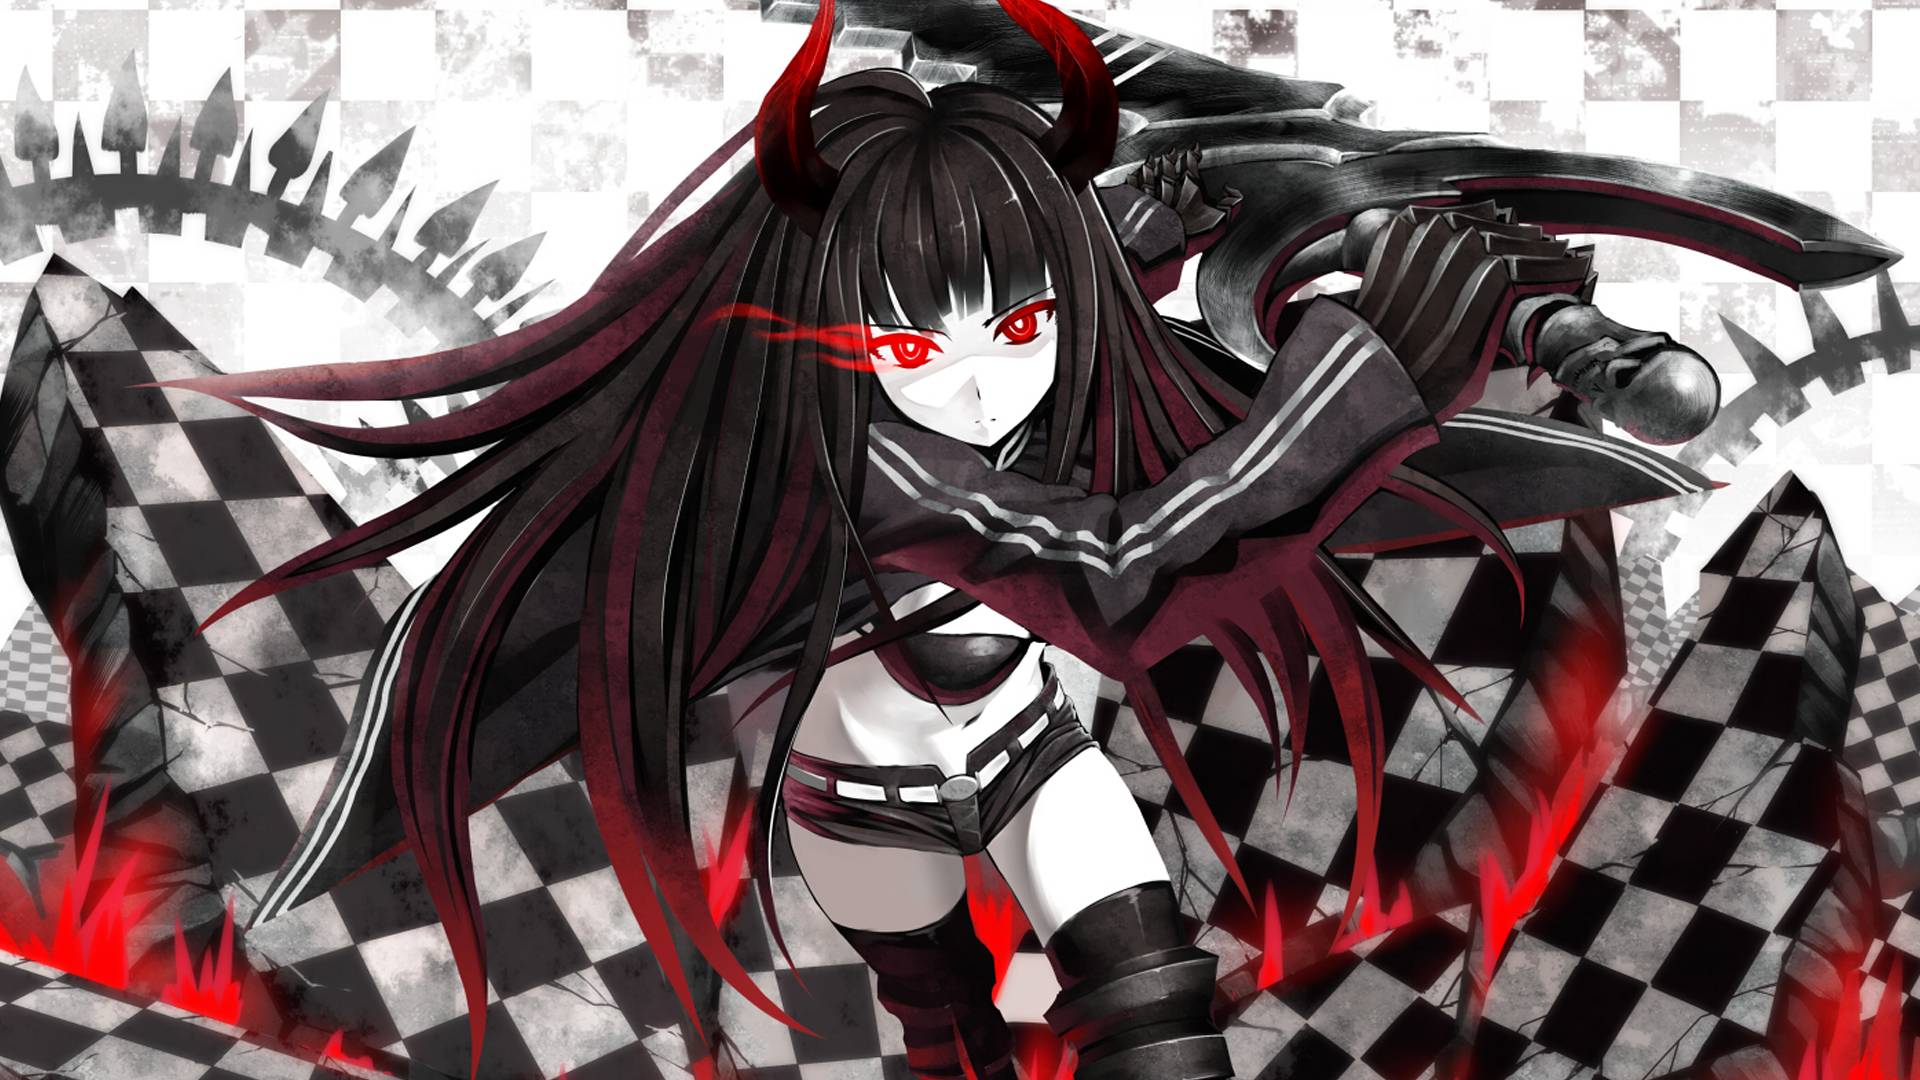 anime girls transforming evil - Google Search | Demons | Pinterest